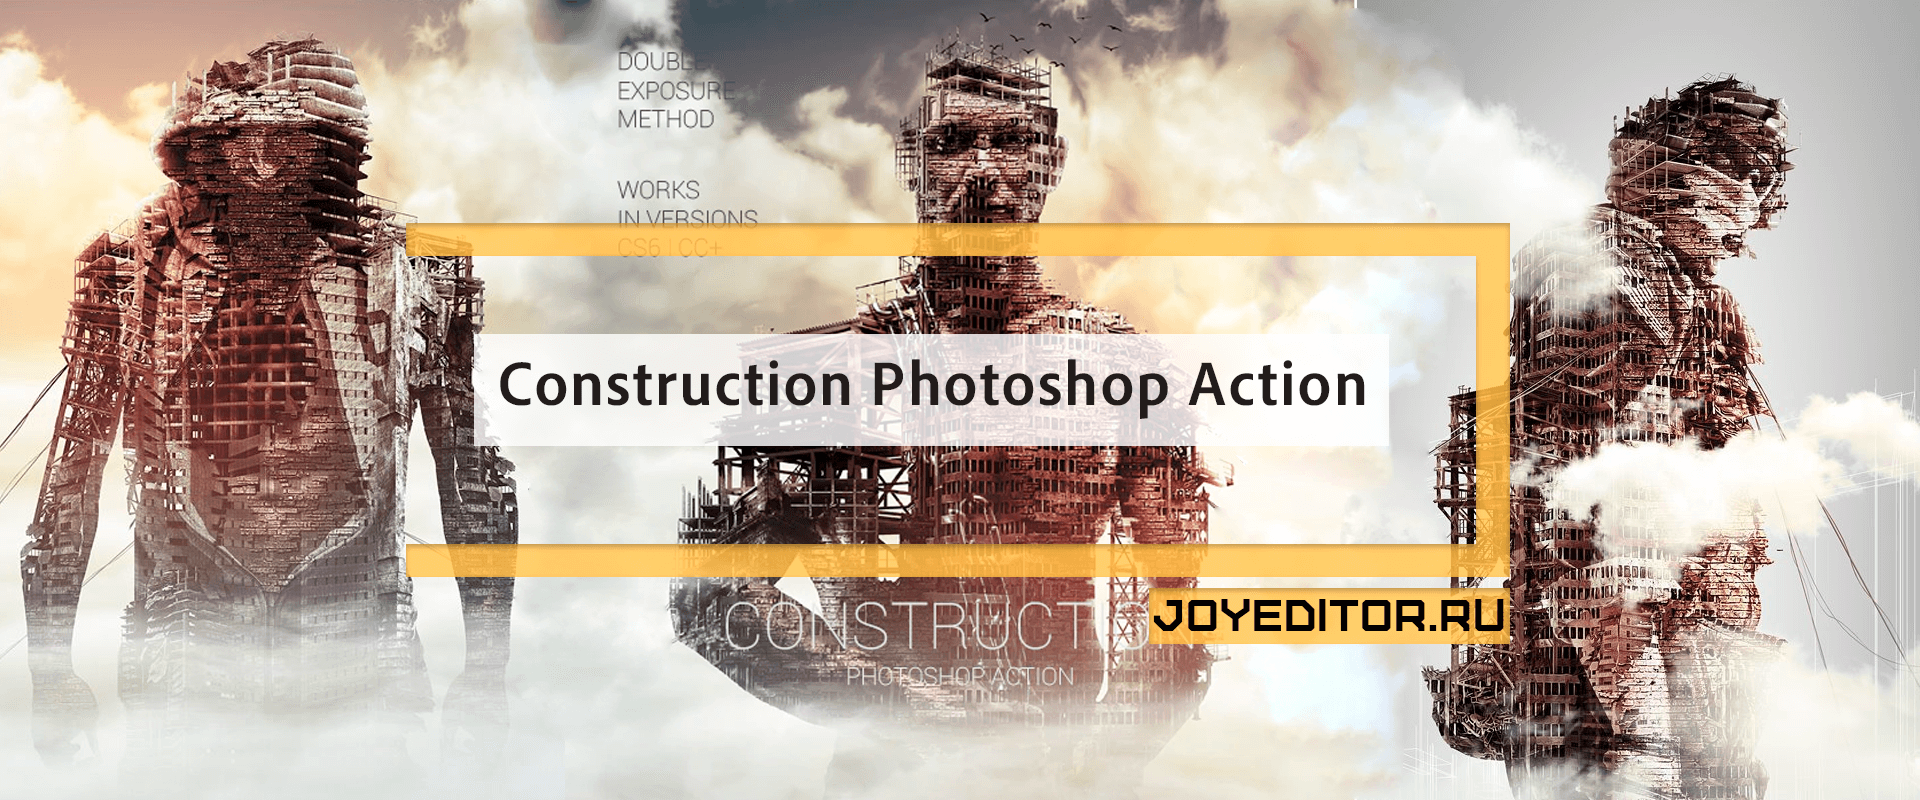 Construction Photoshop Action